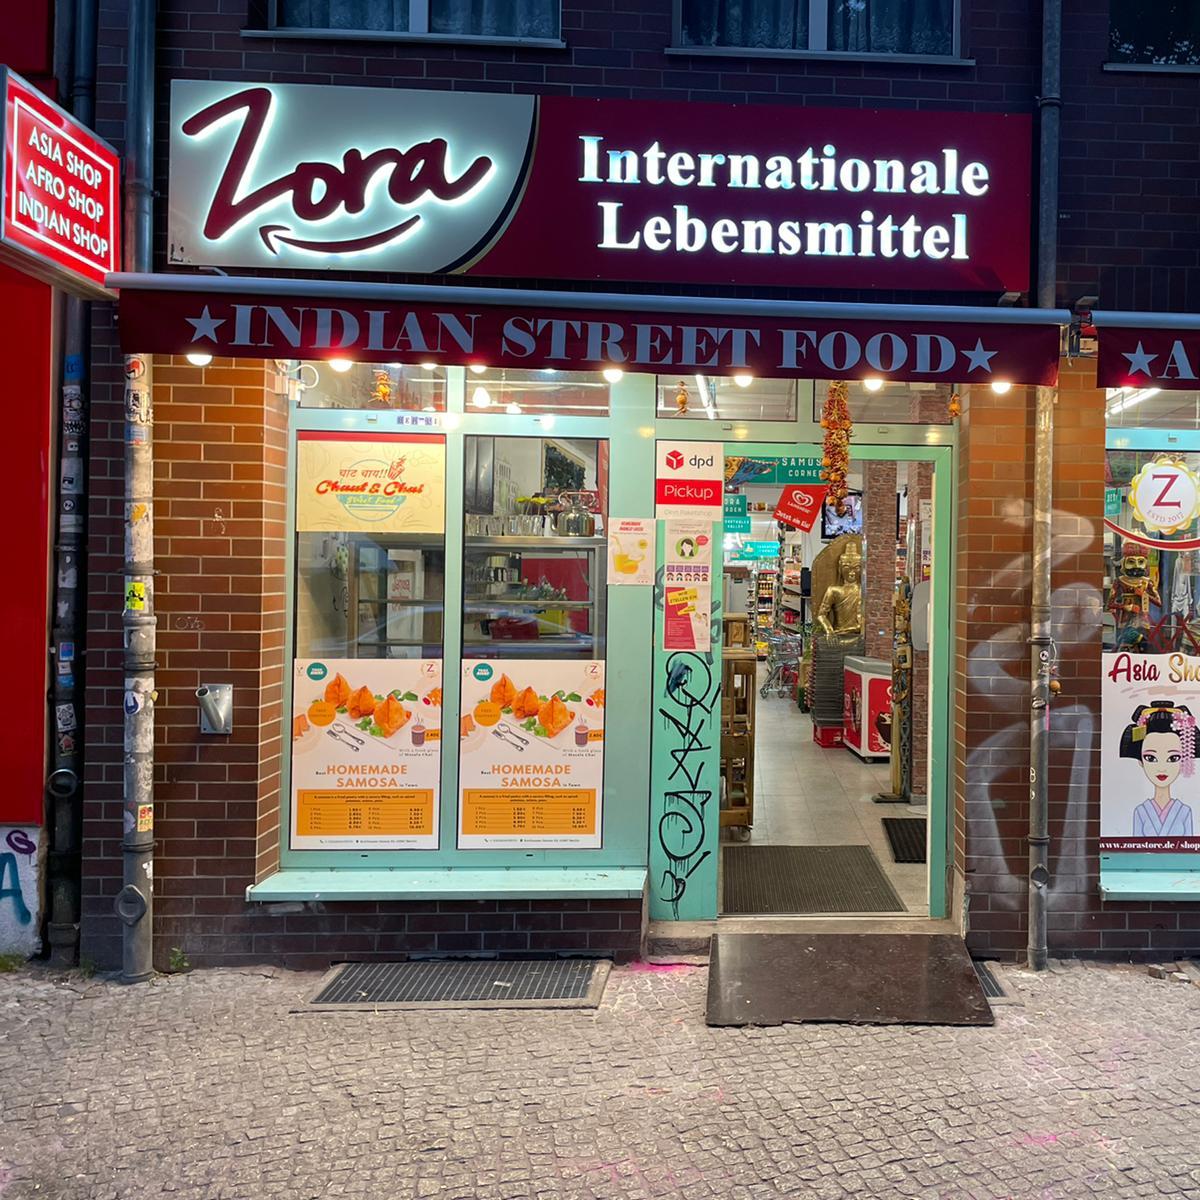 Restaurant "Zora Supermarkt - Indian, Asian, African Grocery" in Berlin